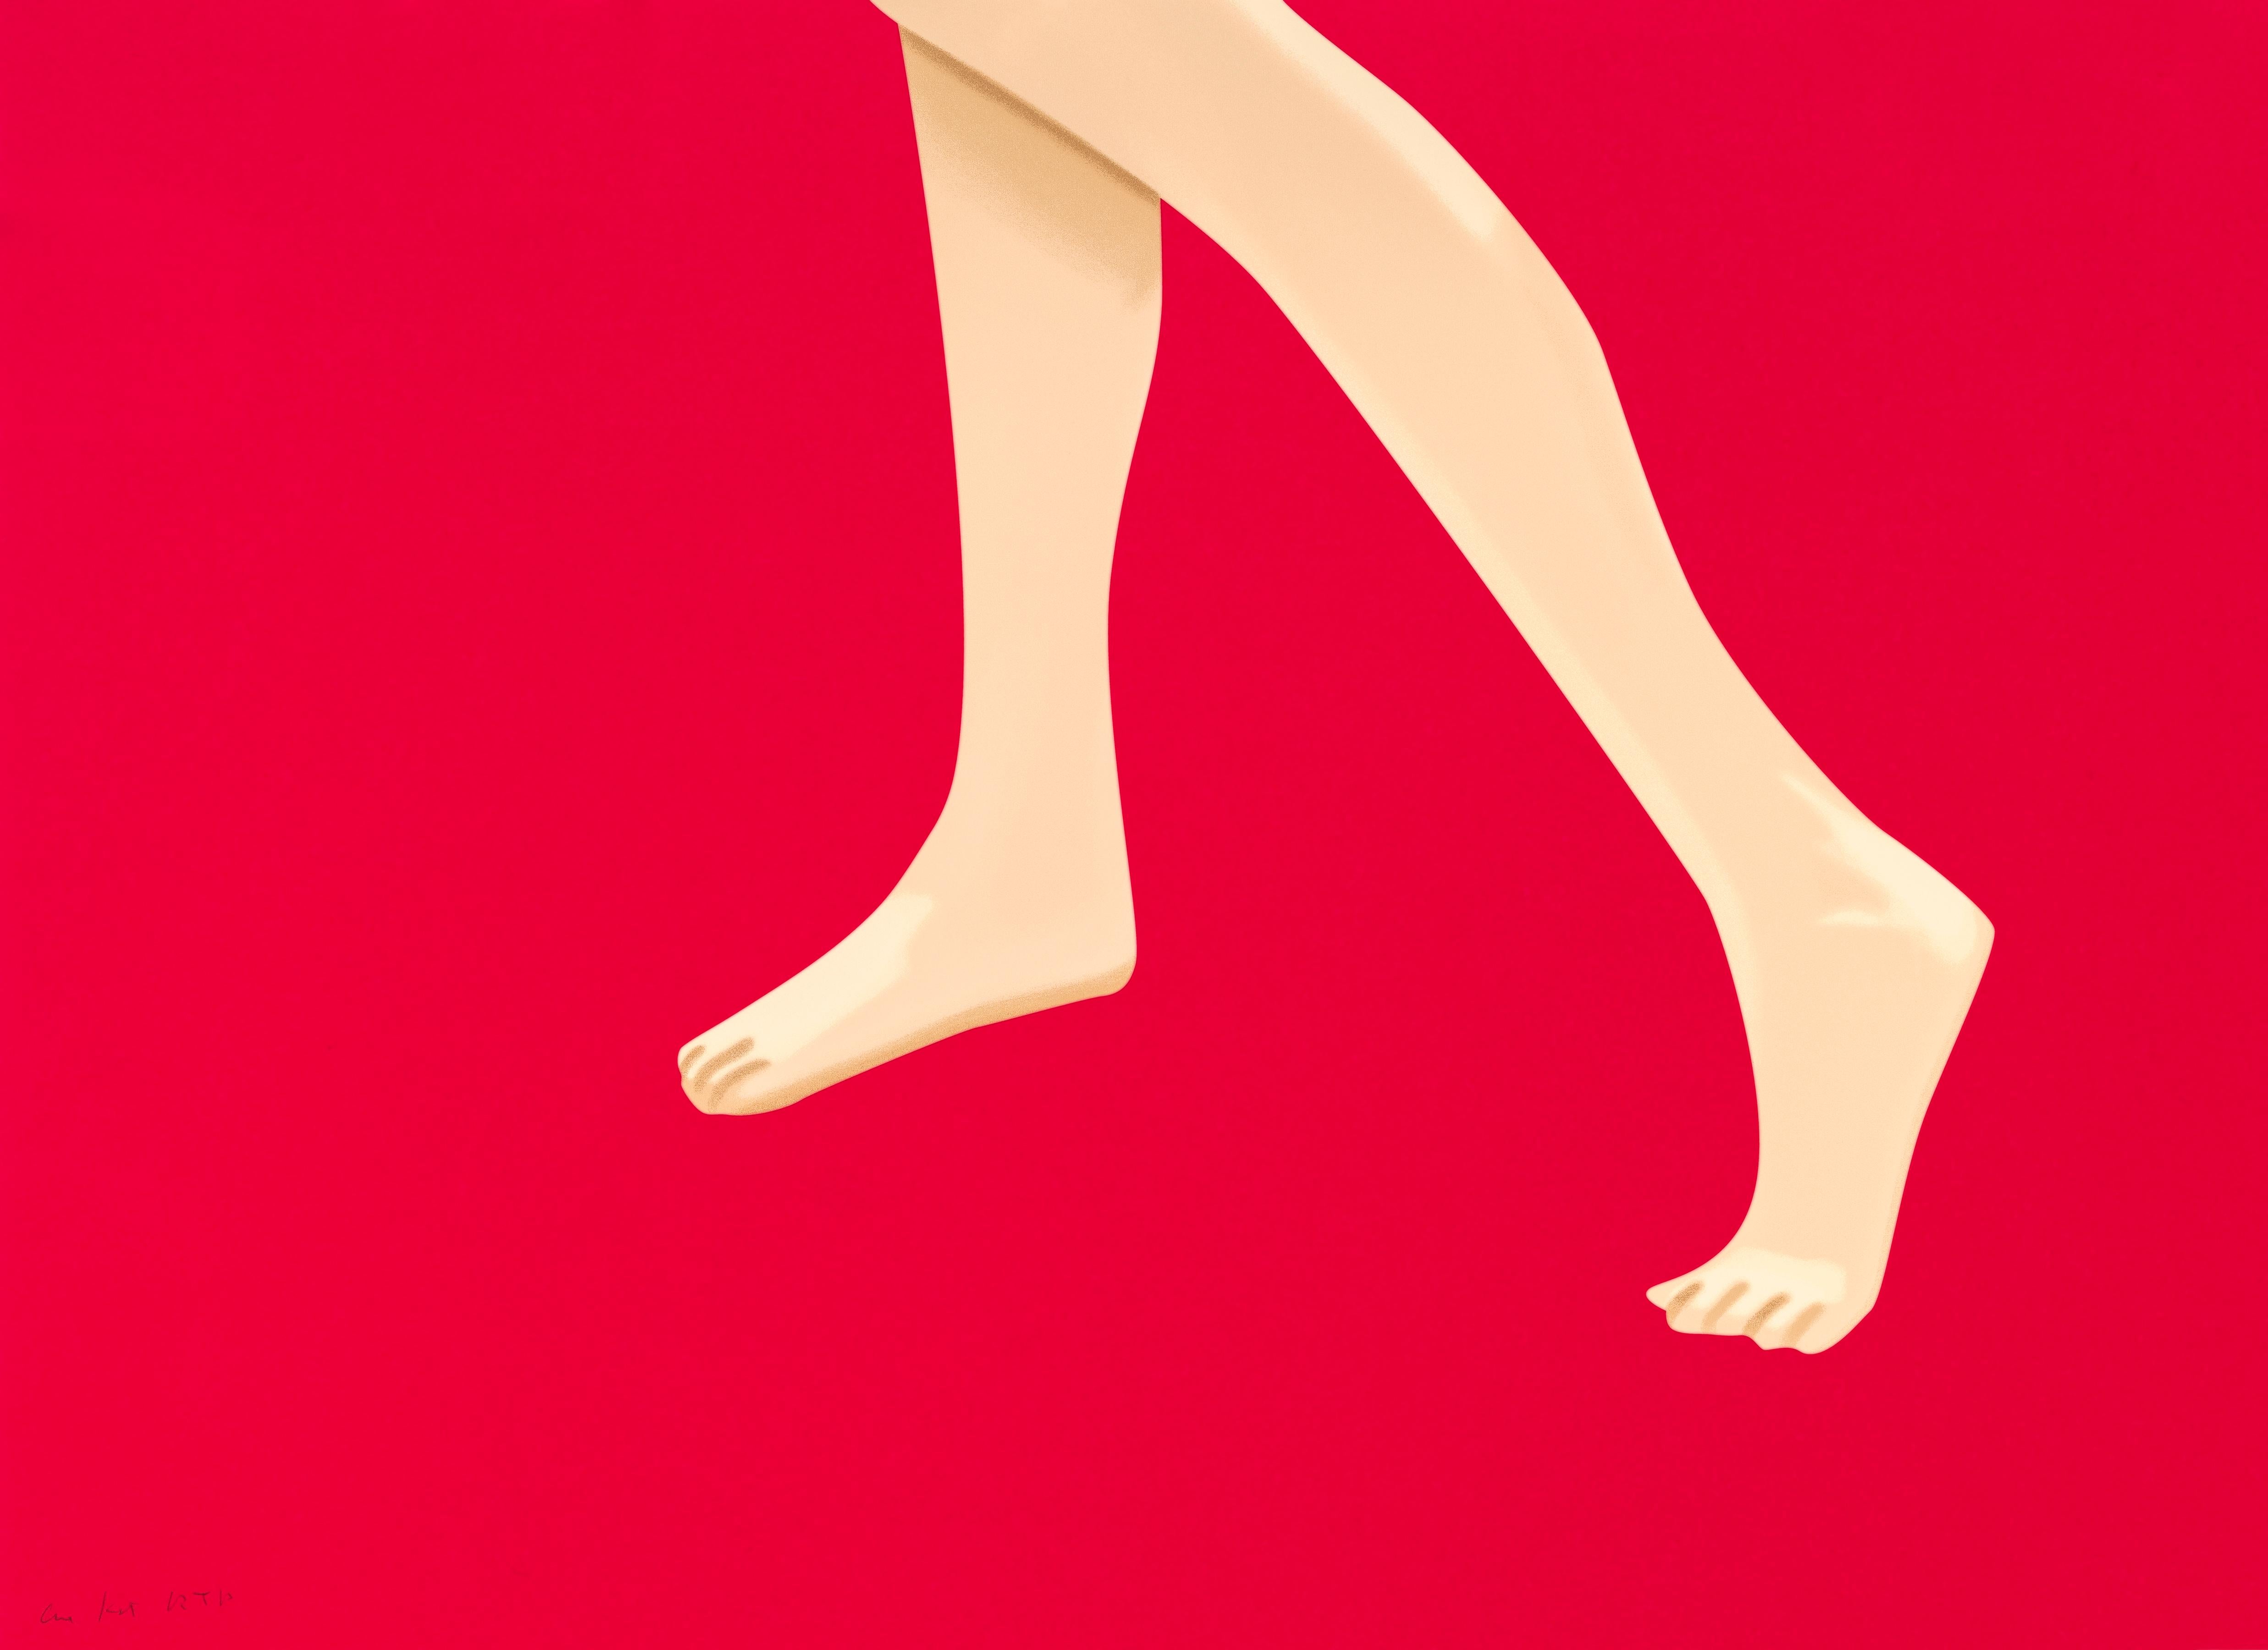 Coca-Cola Girl 8 - 21st Century, Contemporary, Alex Katz, Swim Suit, Woman, Red